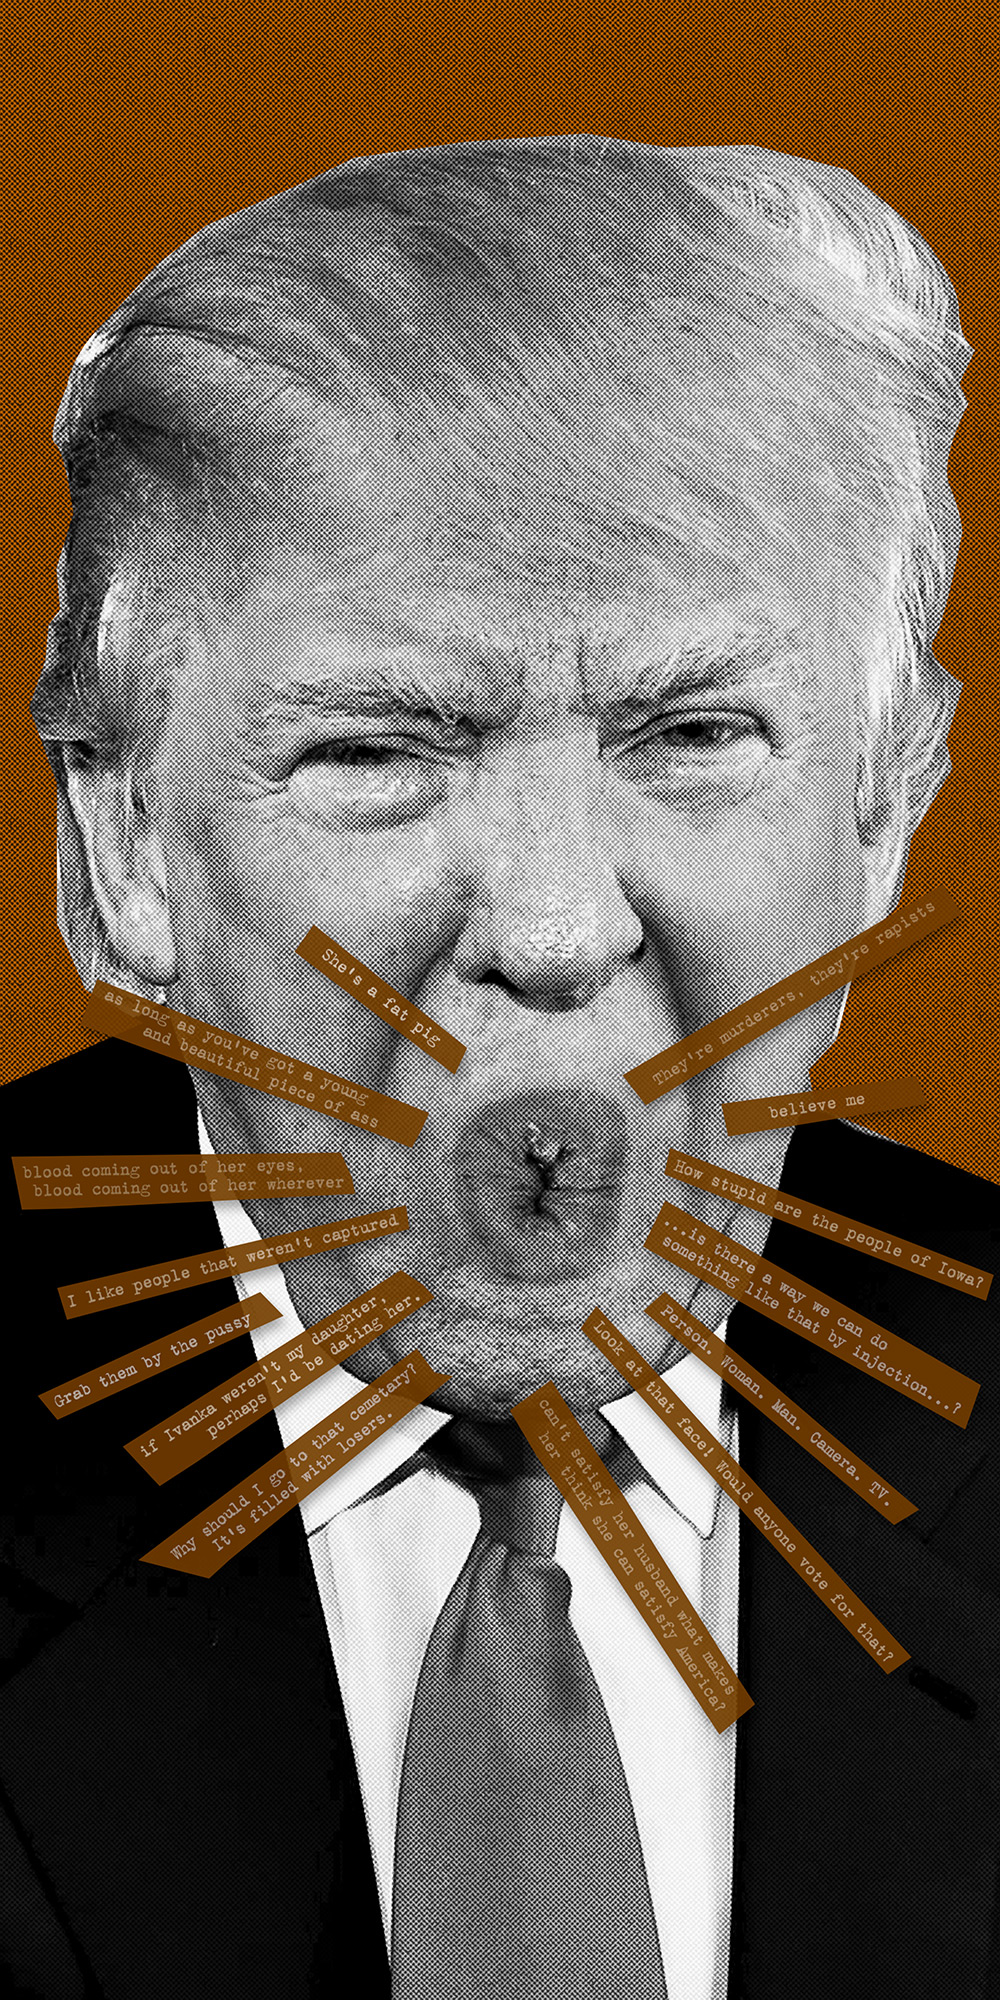 Jeff Kern design for "Donald Trump"